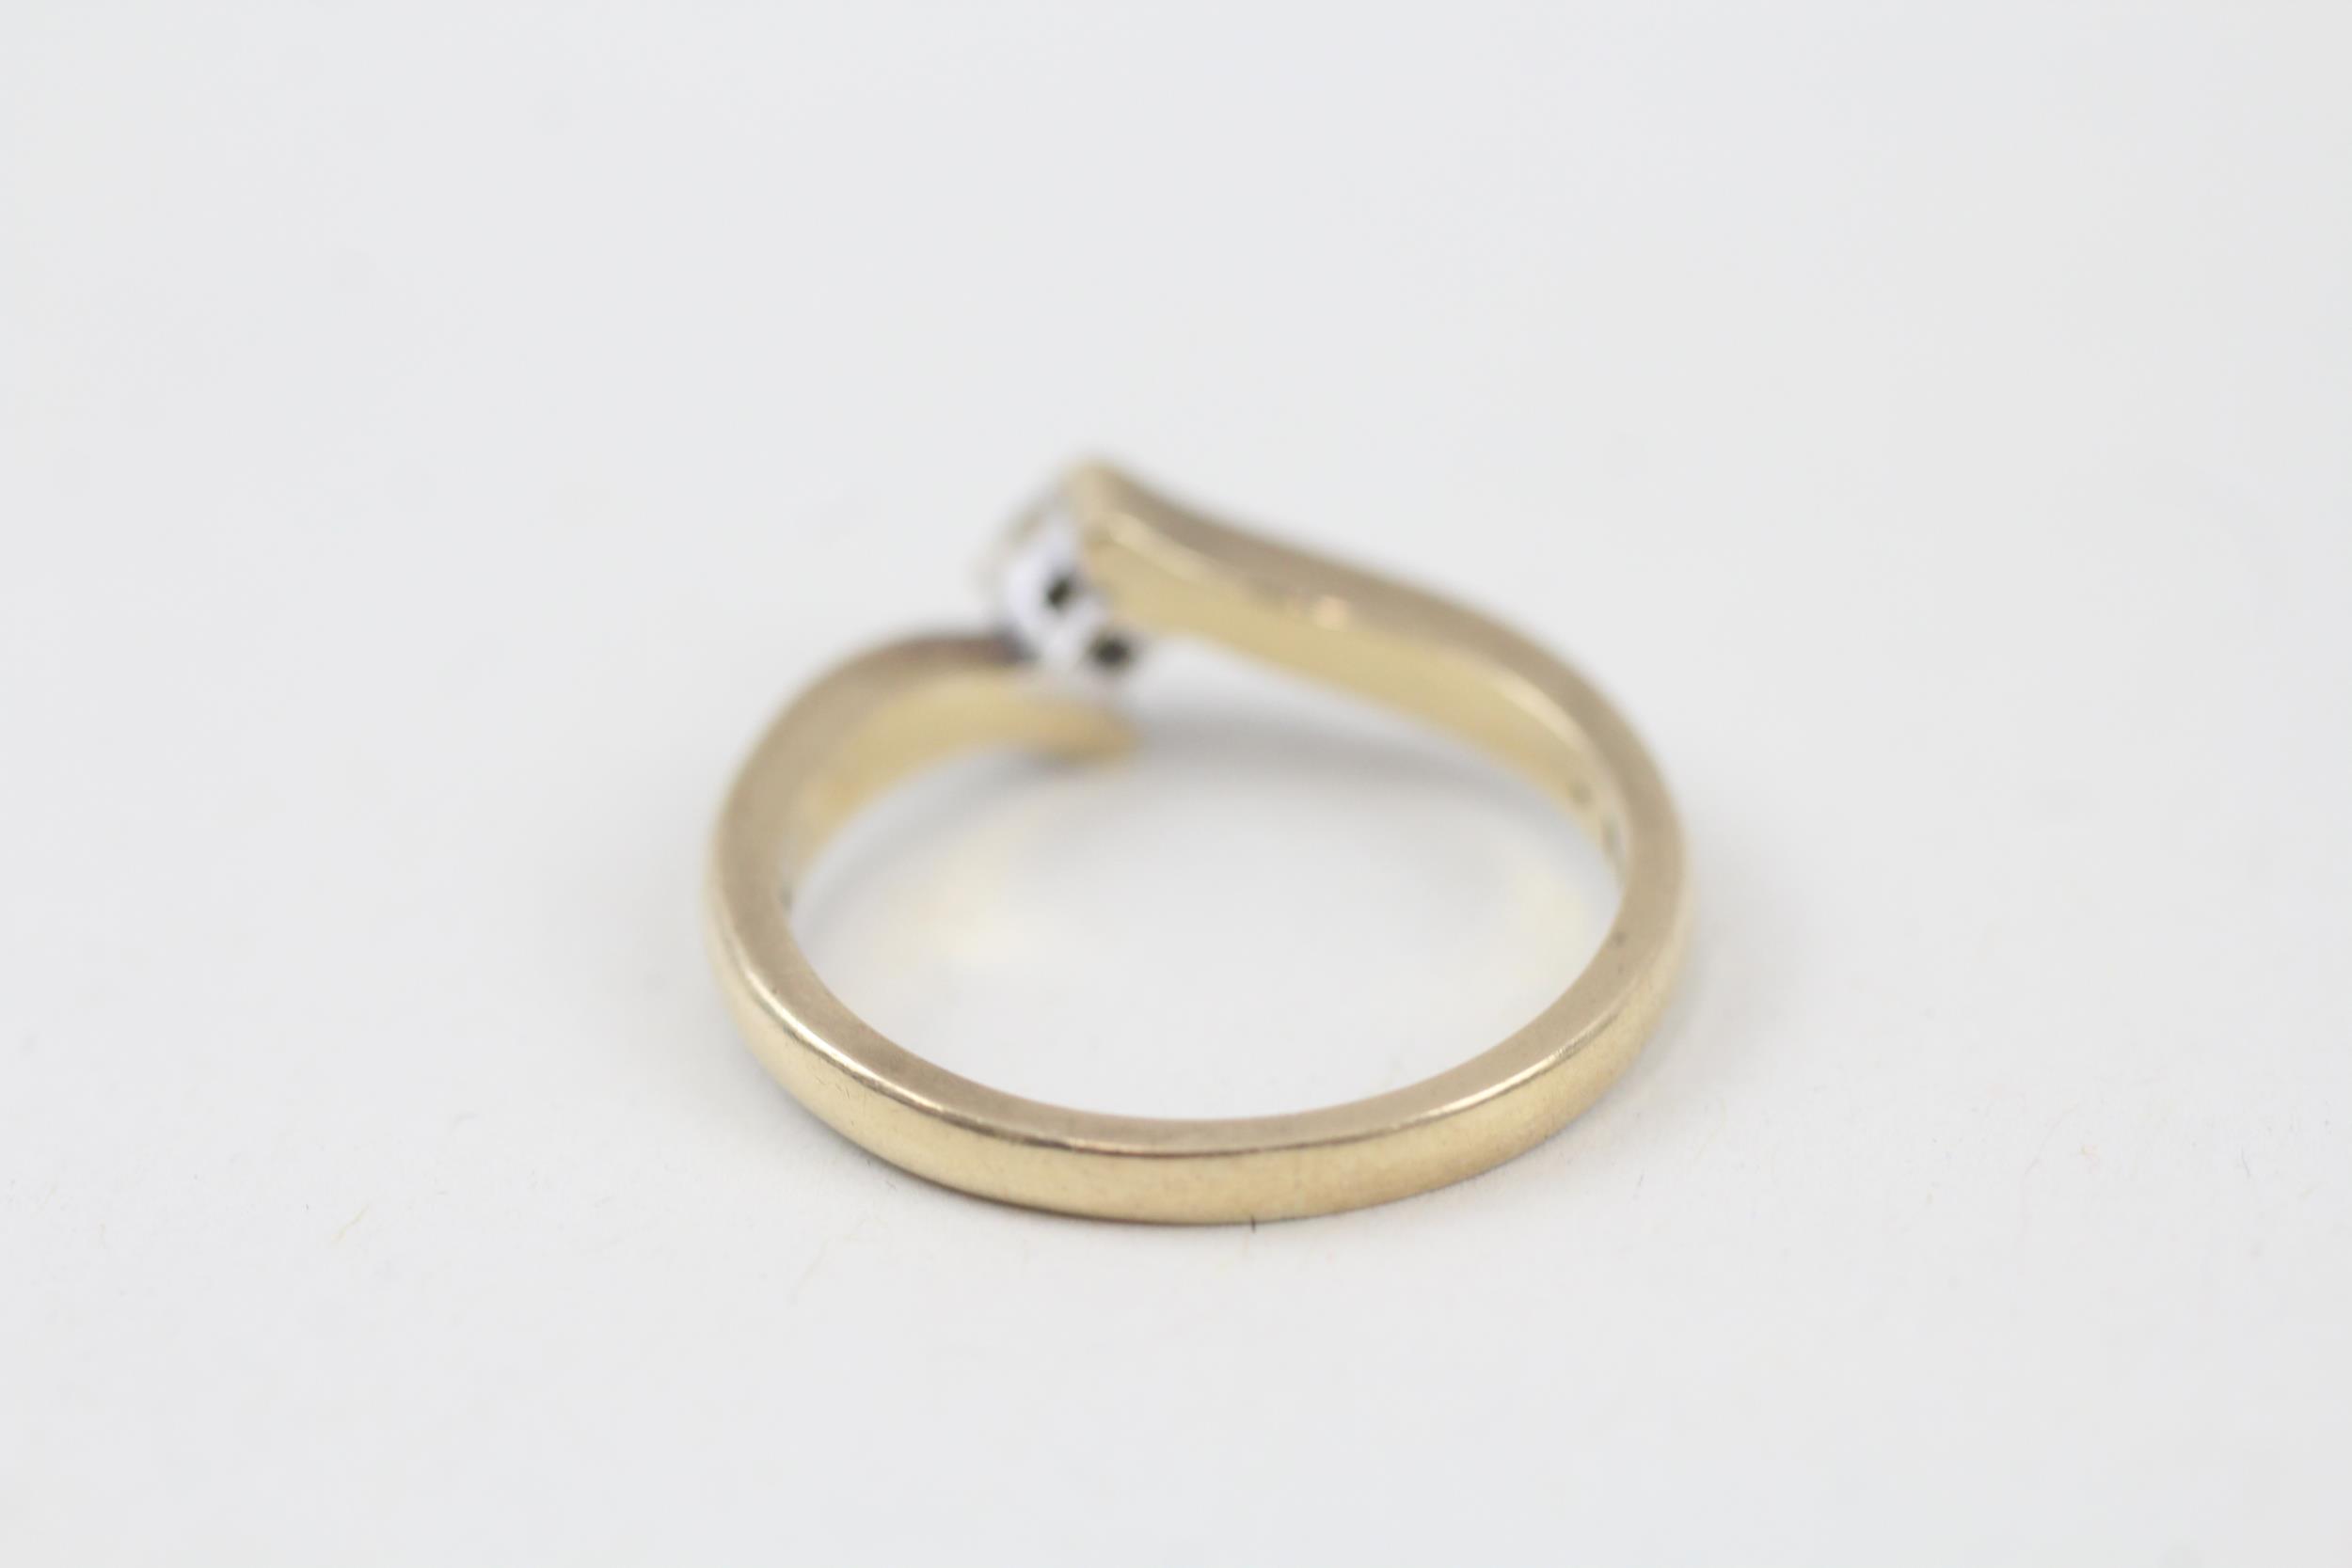 9ct gold circular cut diamond single stone ring Size M - 2.6 g - Image 5 of 7